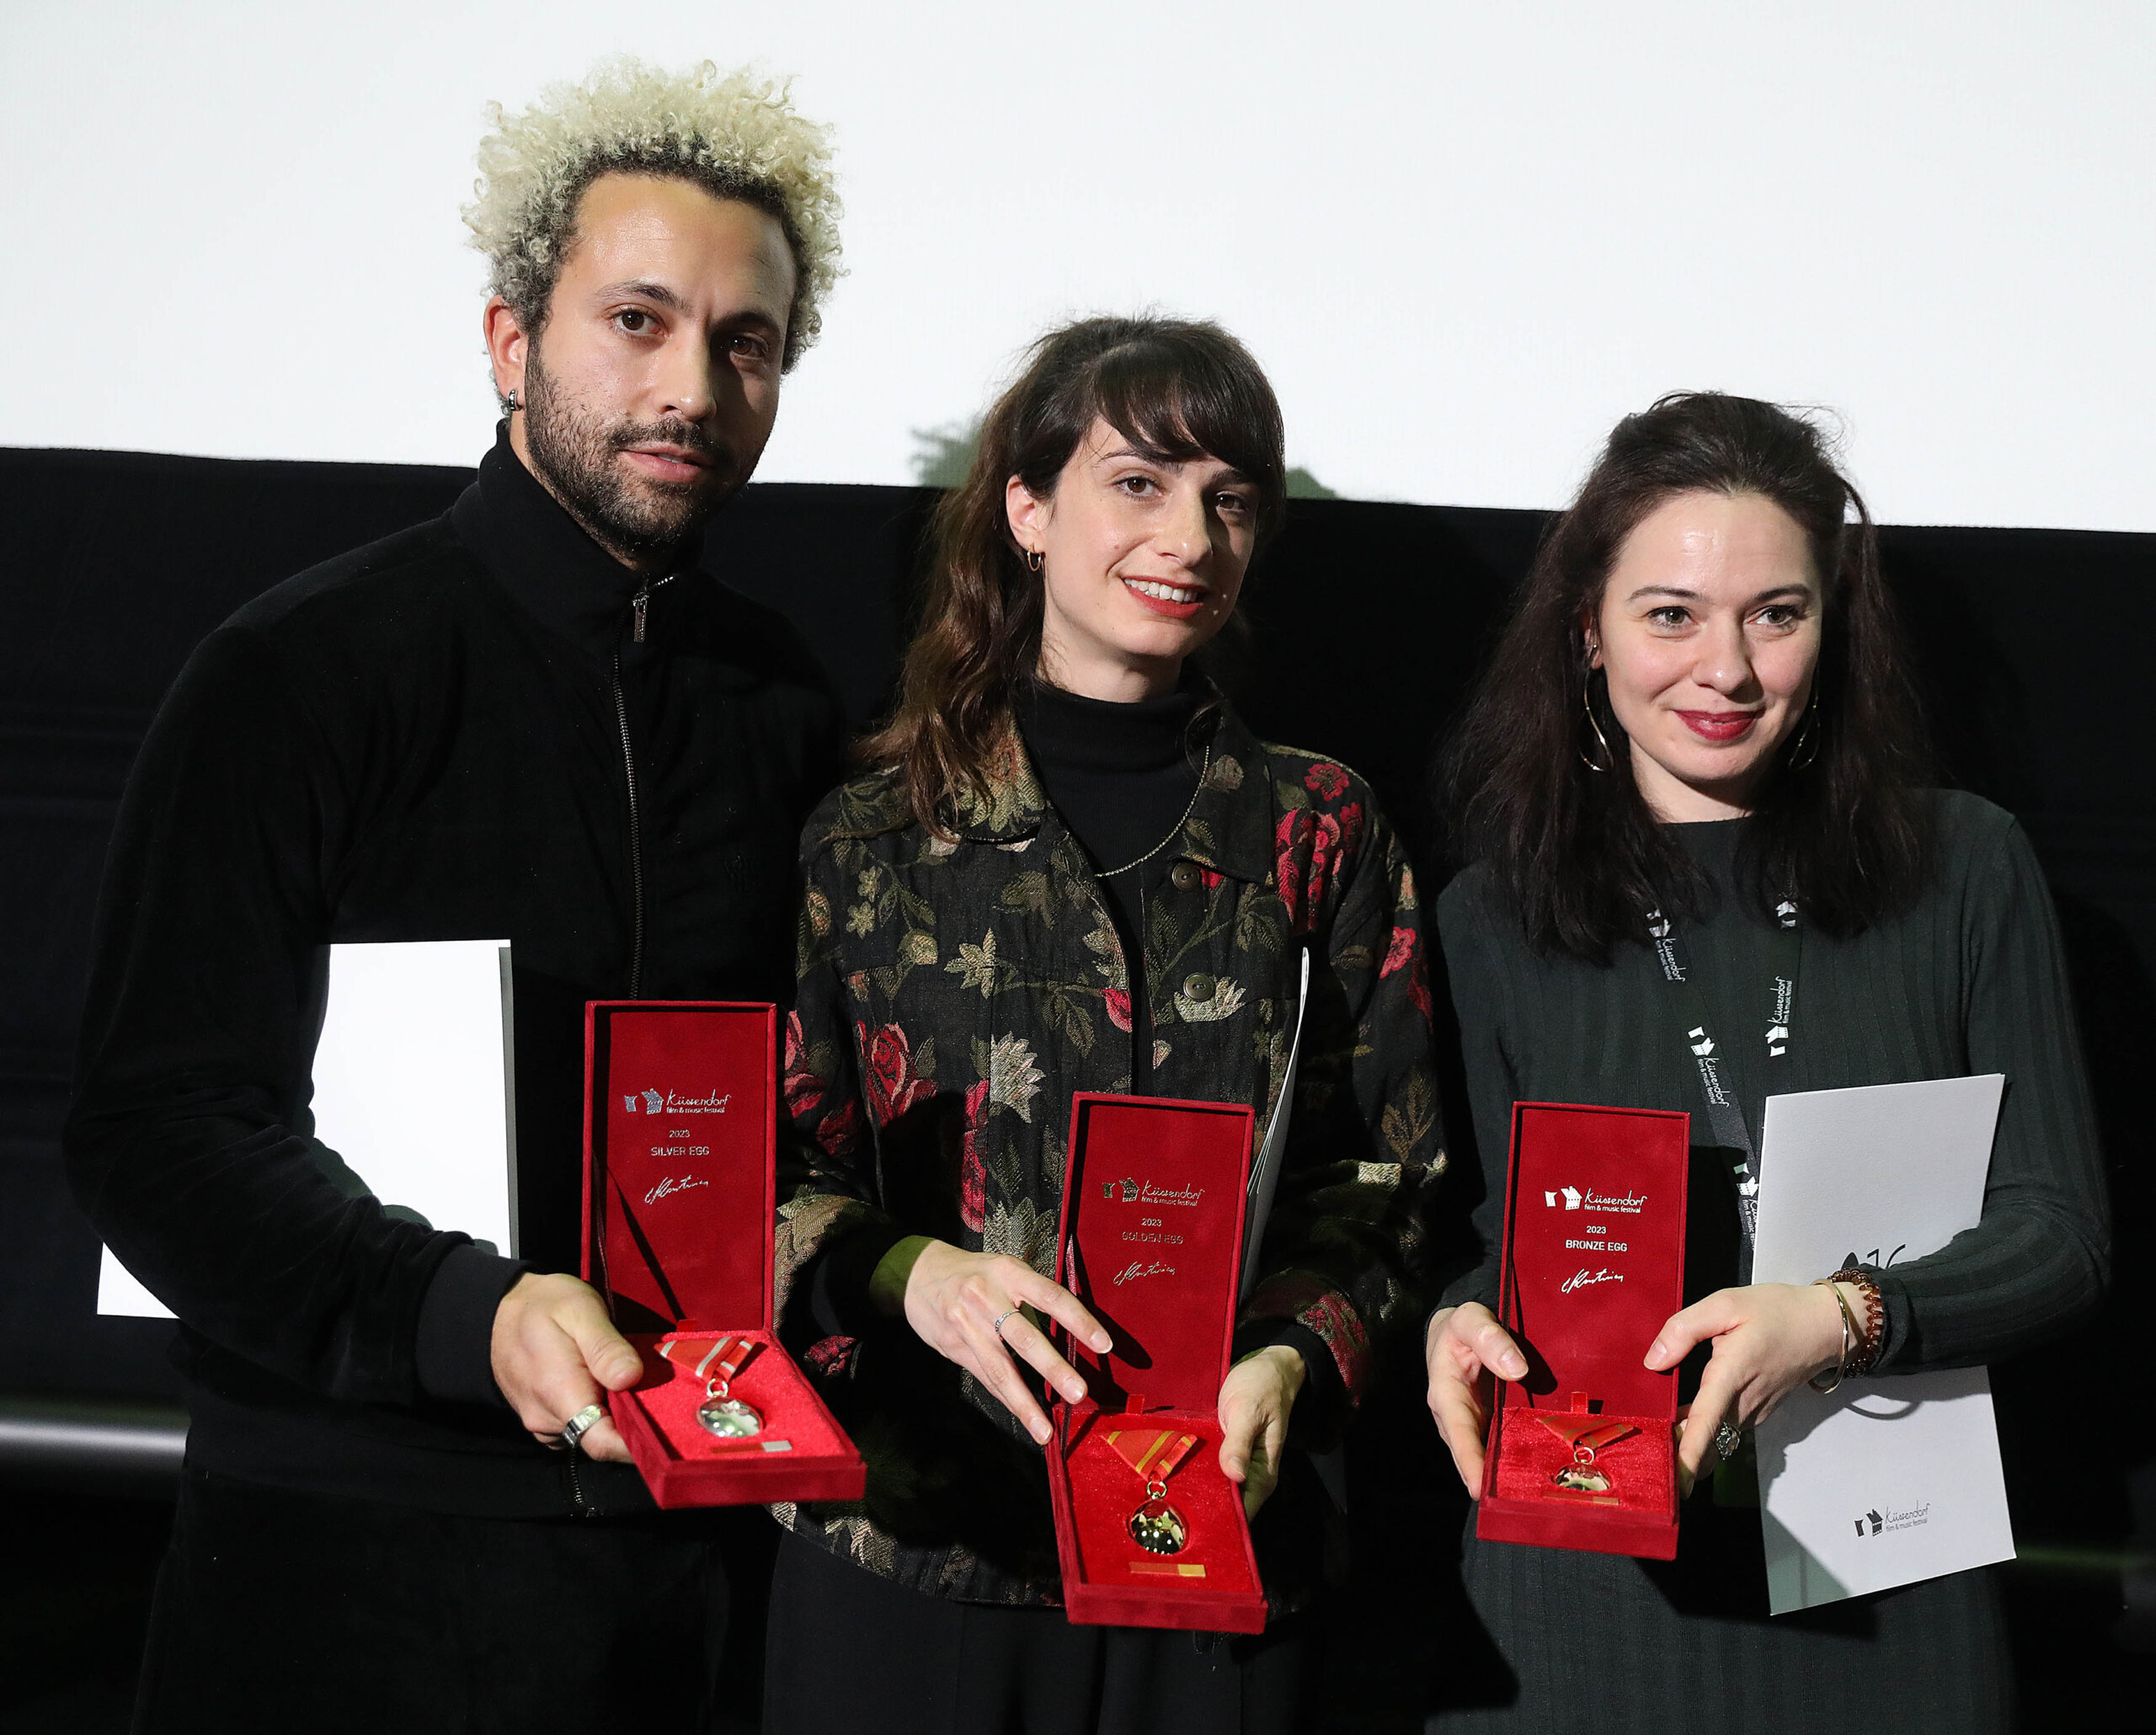 Tri glavne nagrade na 16. Kustendorfu osvojile rediteljke: "Zlatno jaje“ za film Tal Kantor iz Izraela 2